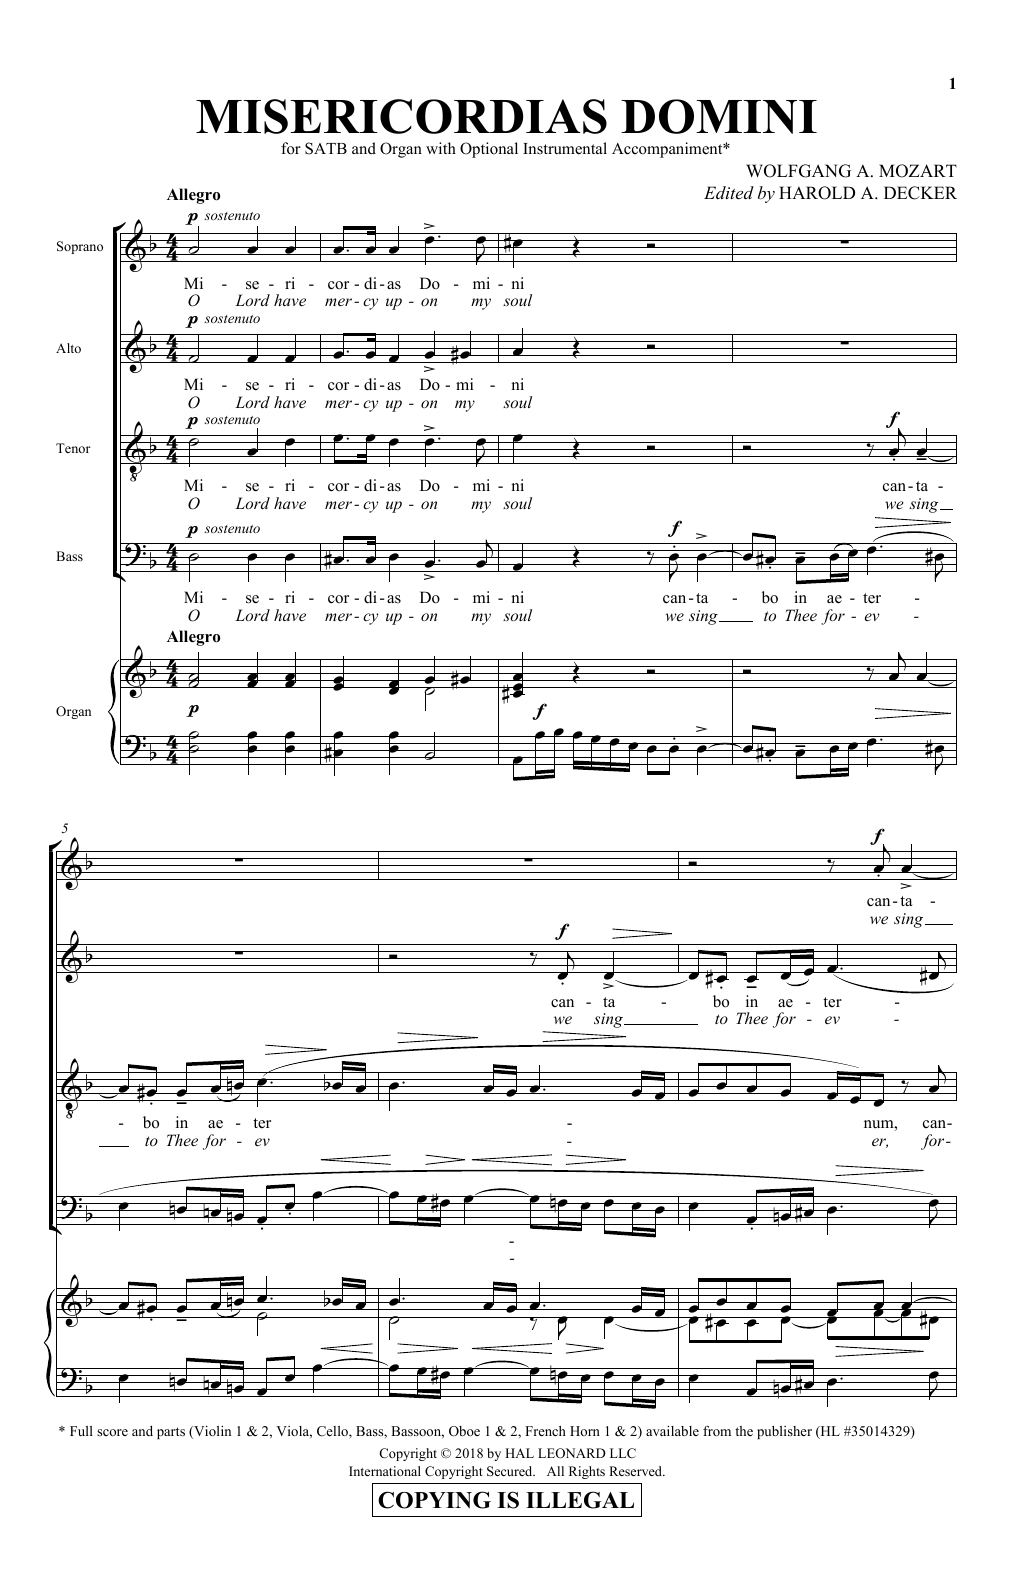 Harold Decker Misericordias Domini sheet music notes and chords arranged for SATB Choir